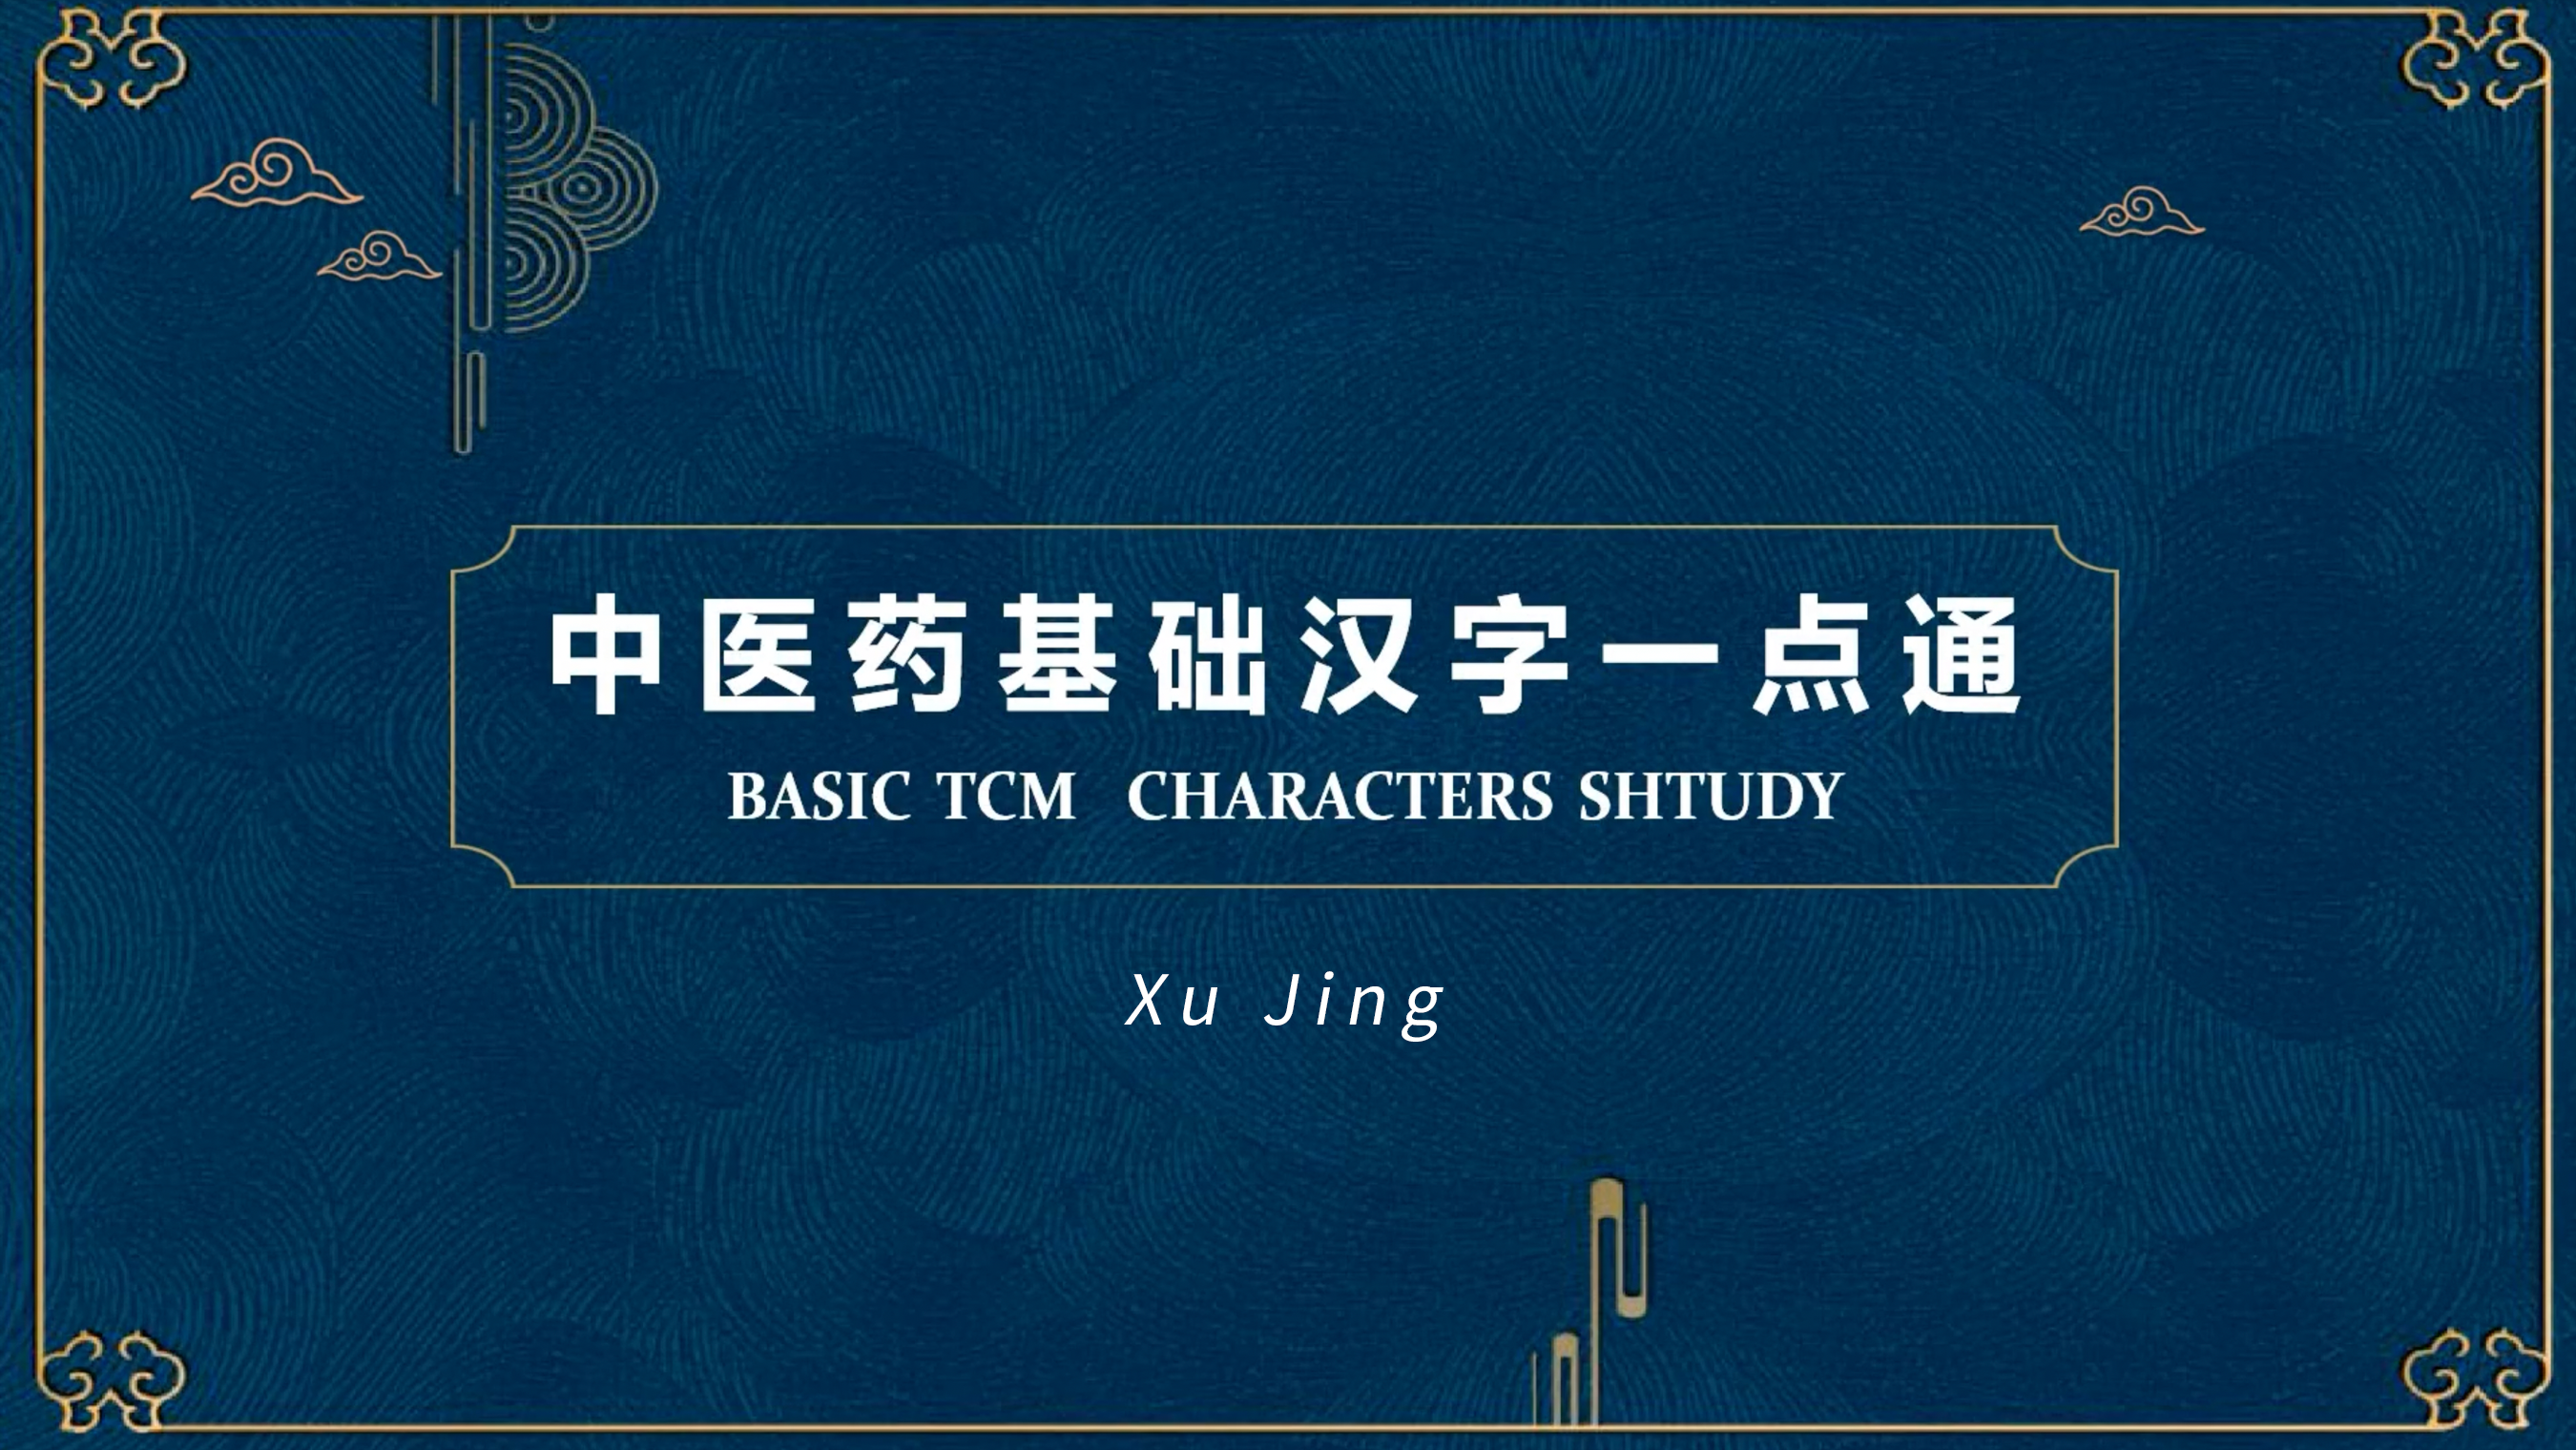 Basic TCM characters study-Xu Jing